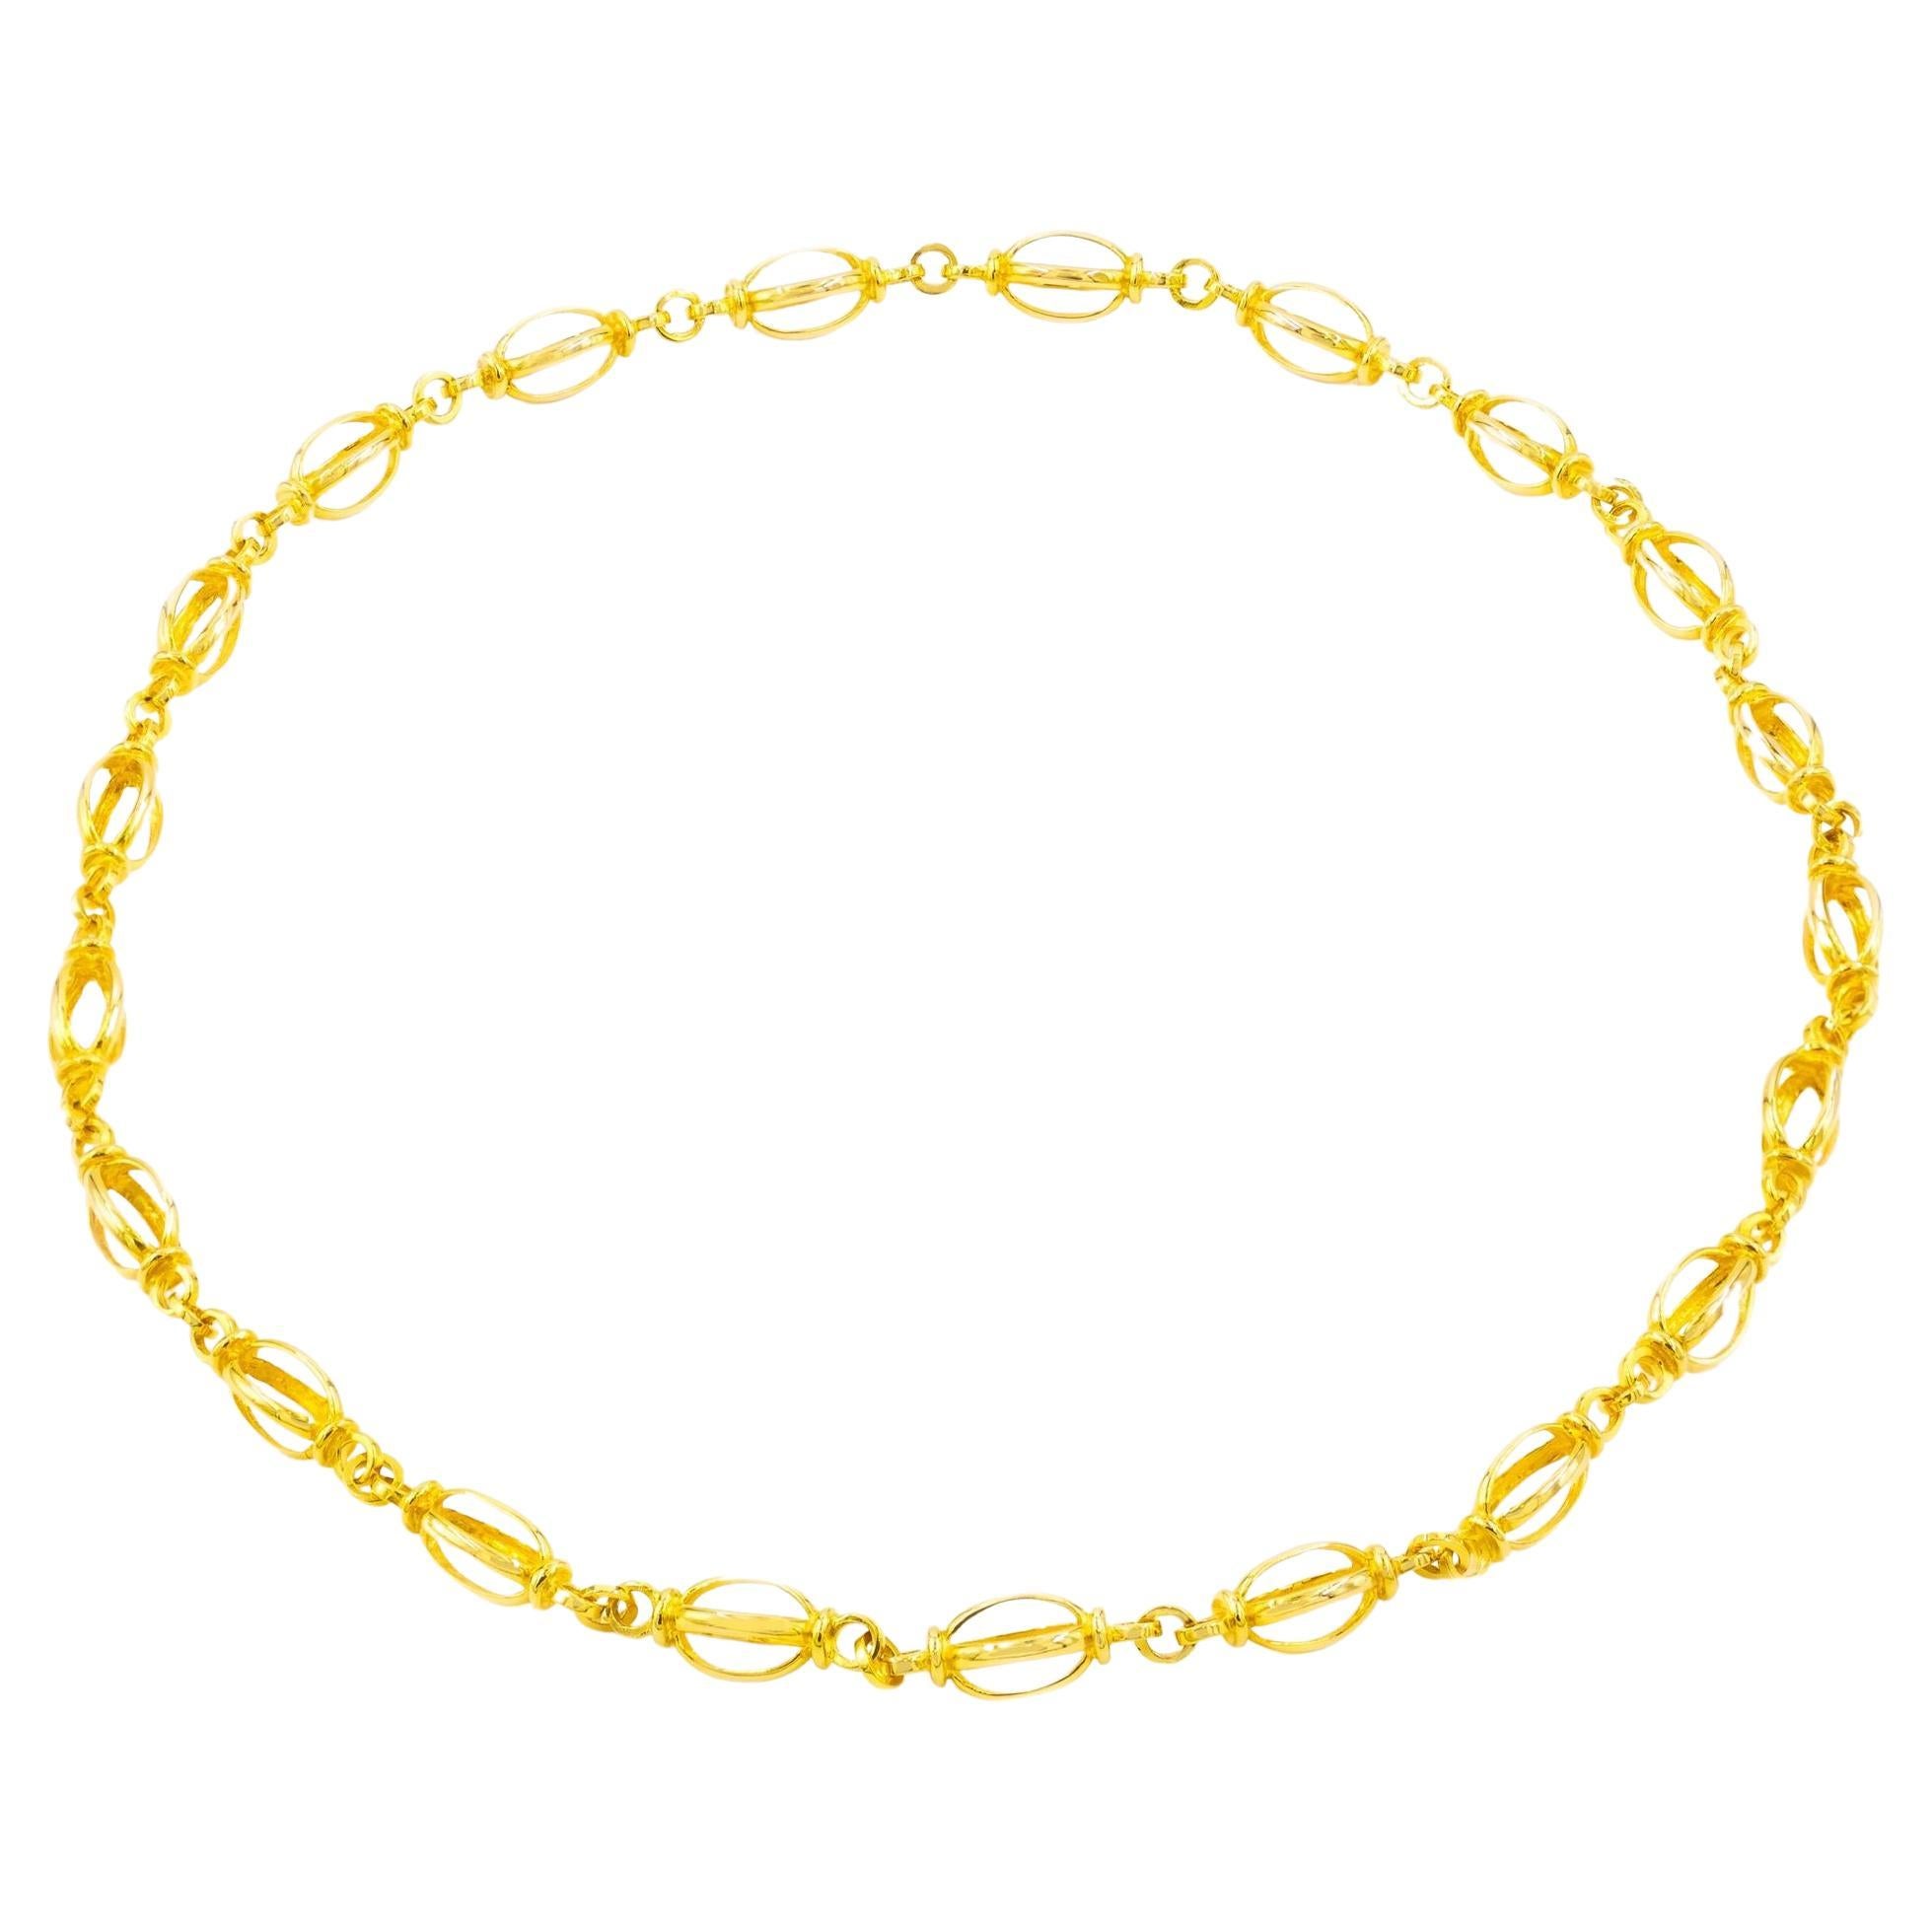 Fine Modernist 14k Gold Necklace by Metropolitan Museum of Art